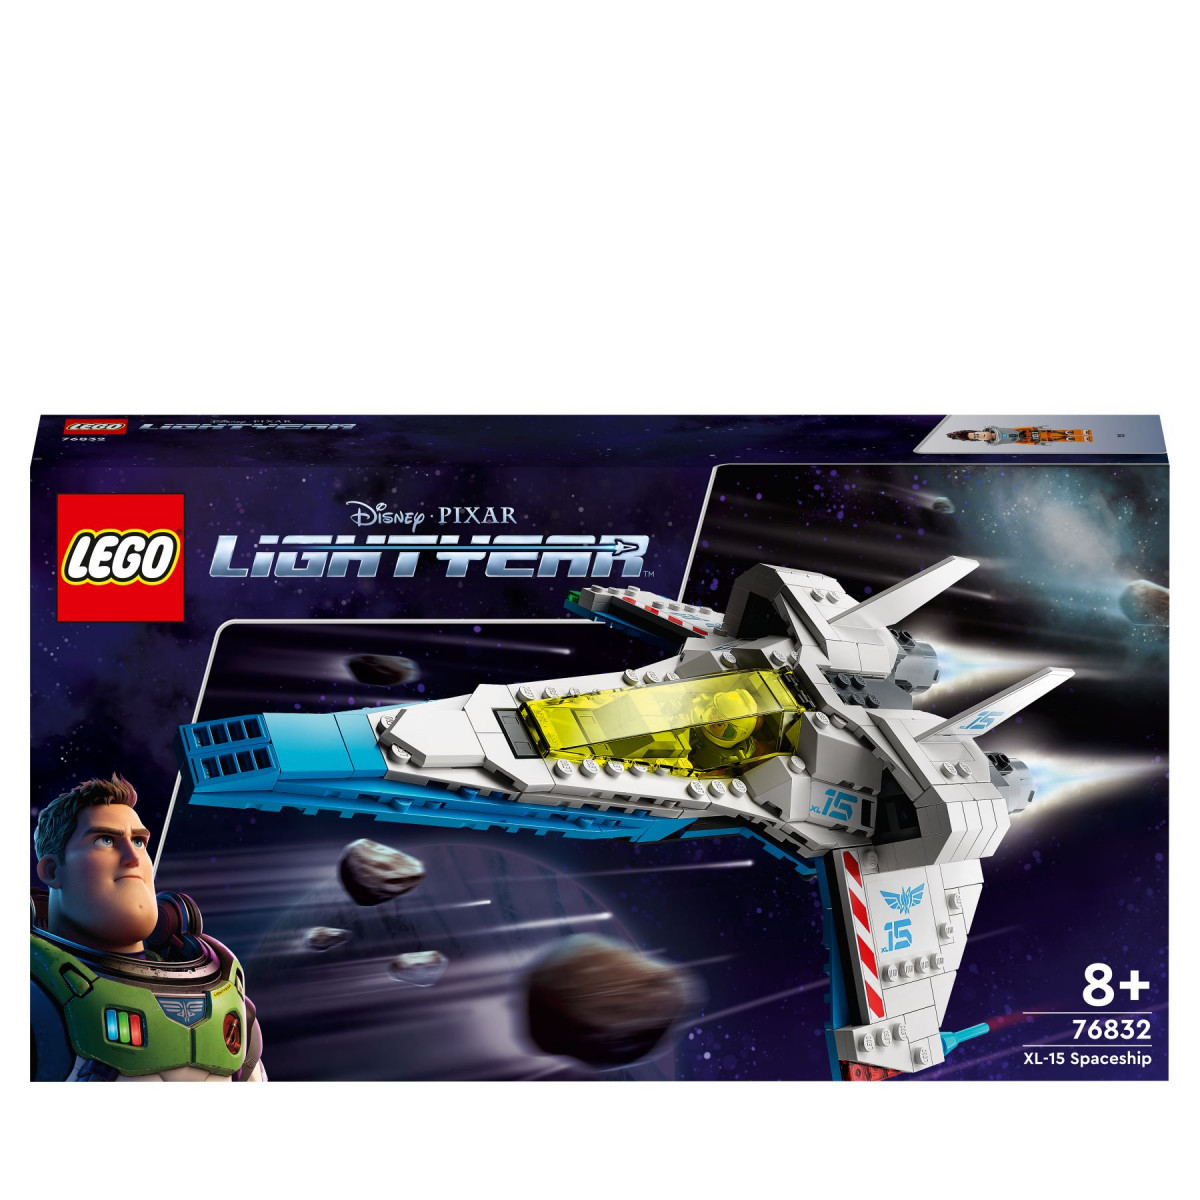 LEGO Lightyear di Disney e Pixar 76382 - Astronave XL-15